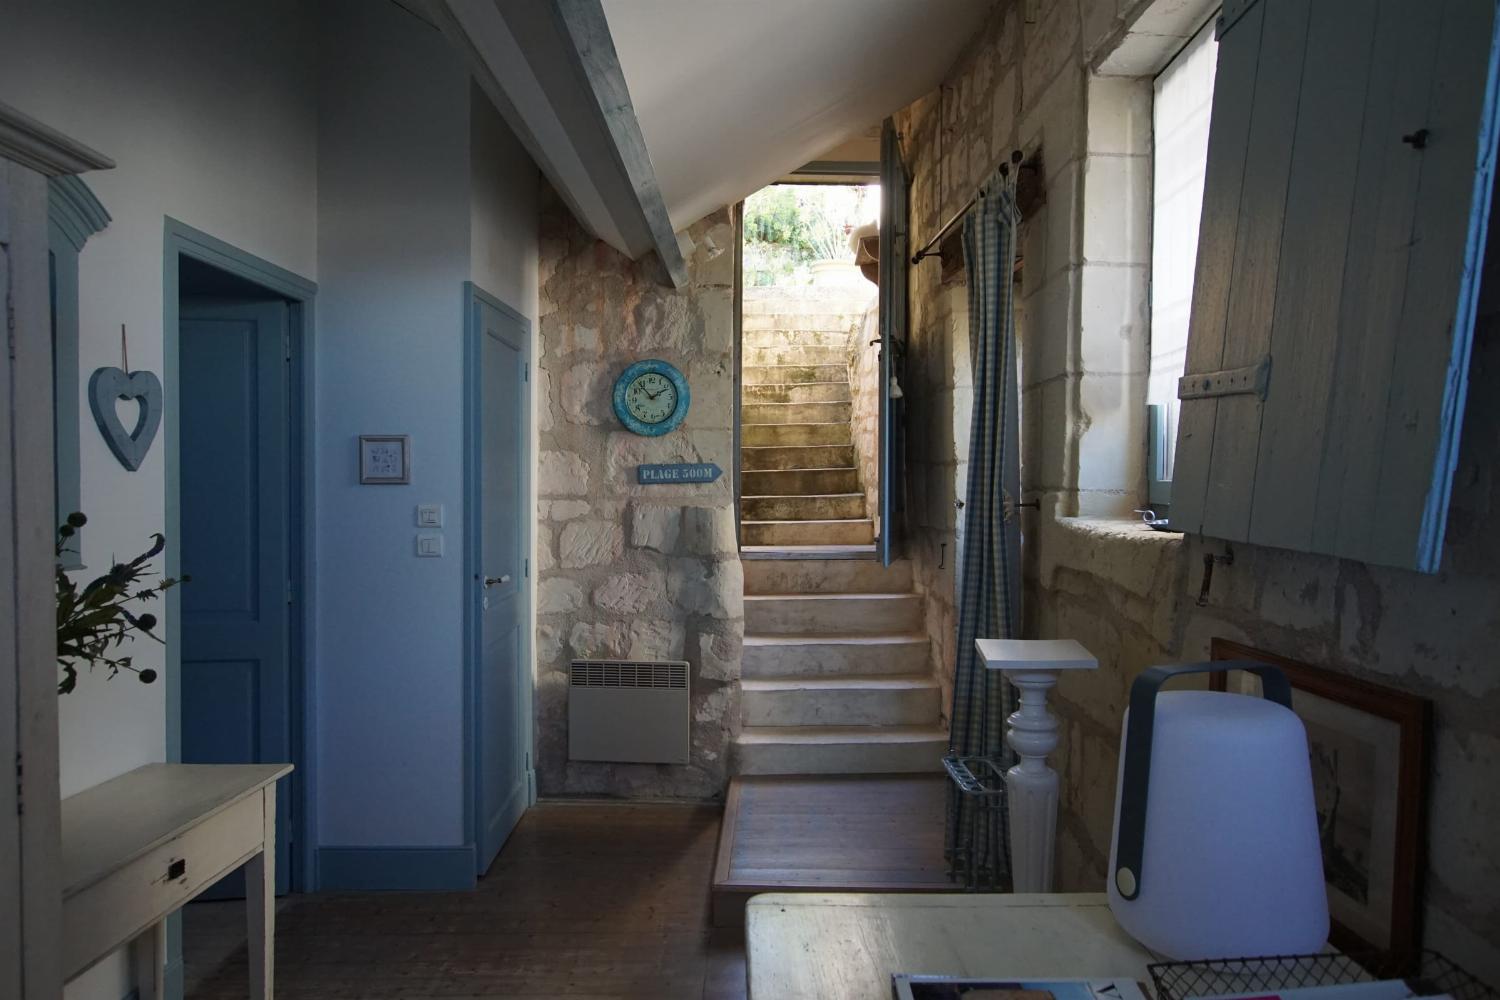 Hallway | Rental home in Maine-et-Loire